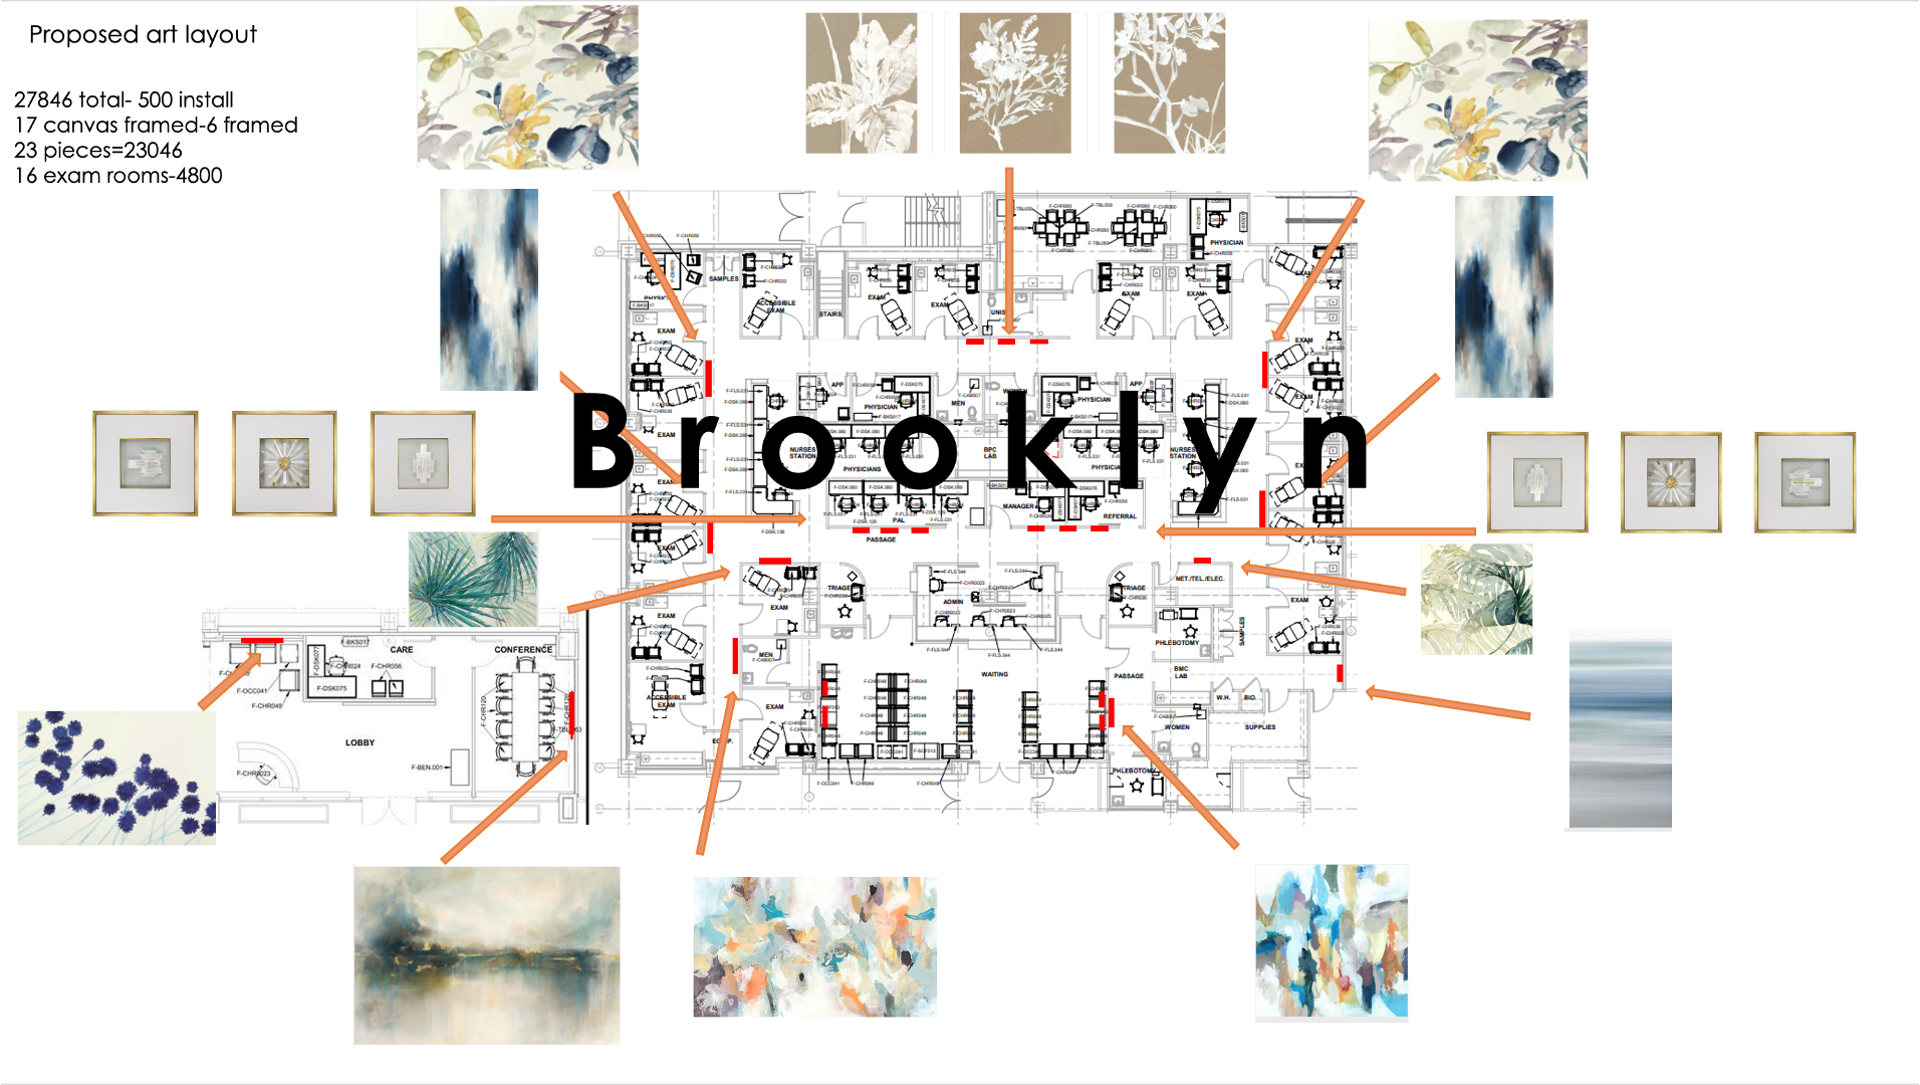 BPC Brooklyn-23 framed Canvas Prints & 6 framed dimensional pieces by Printwork LB